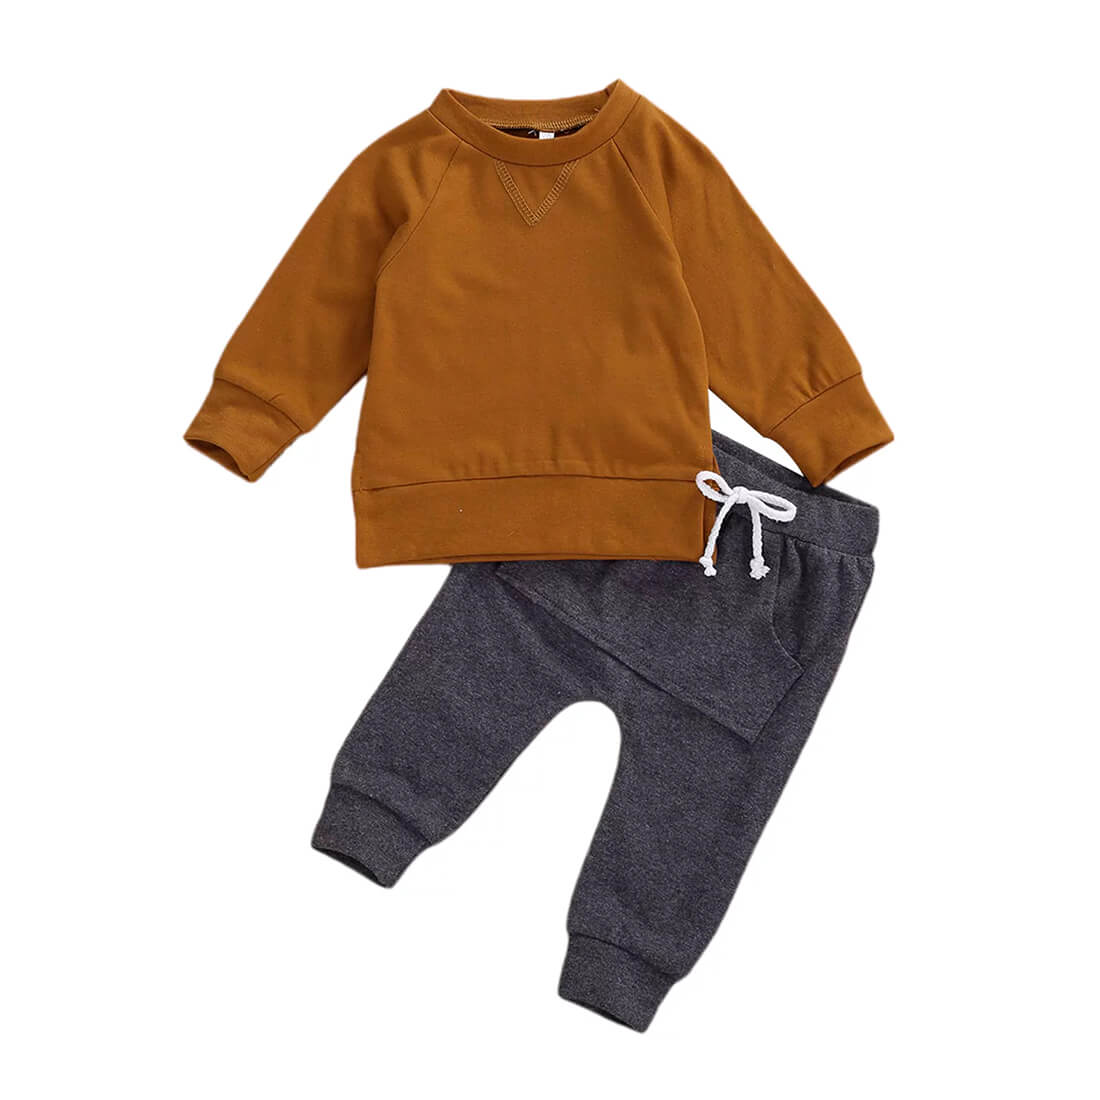 Brown Sweatshirt Baby Set   